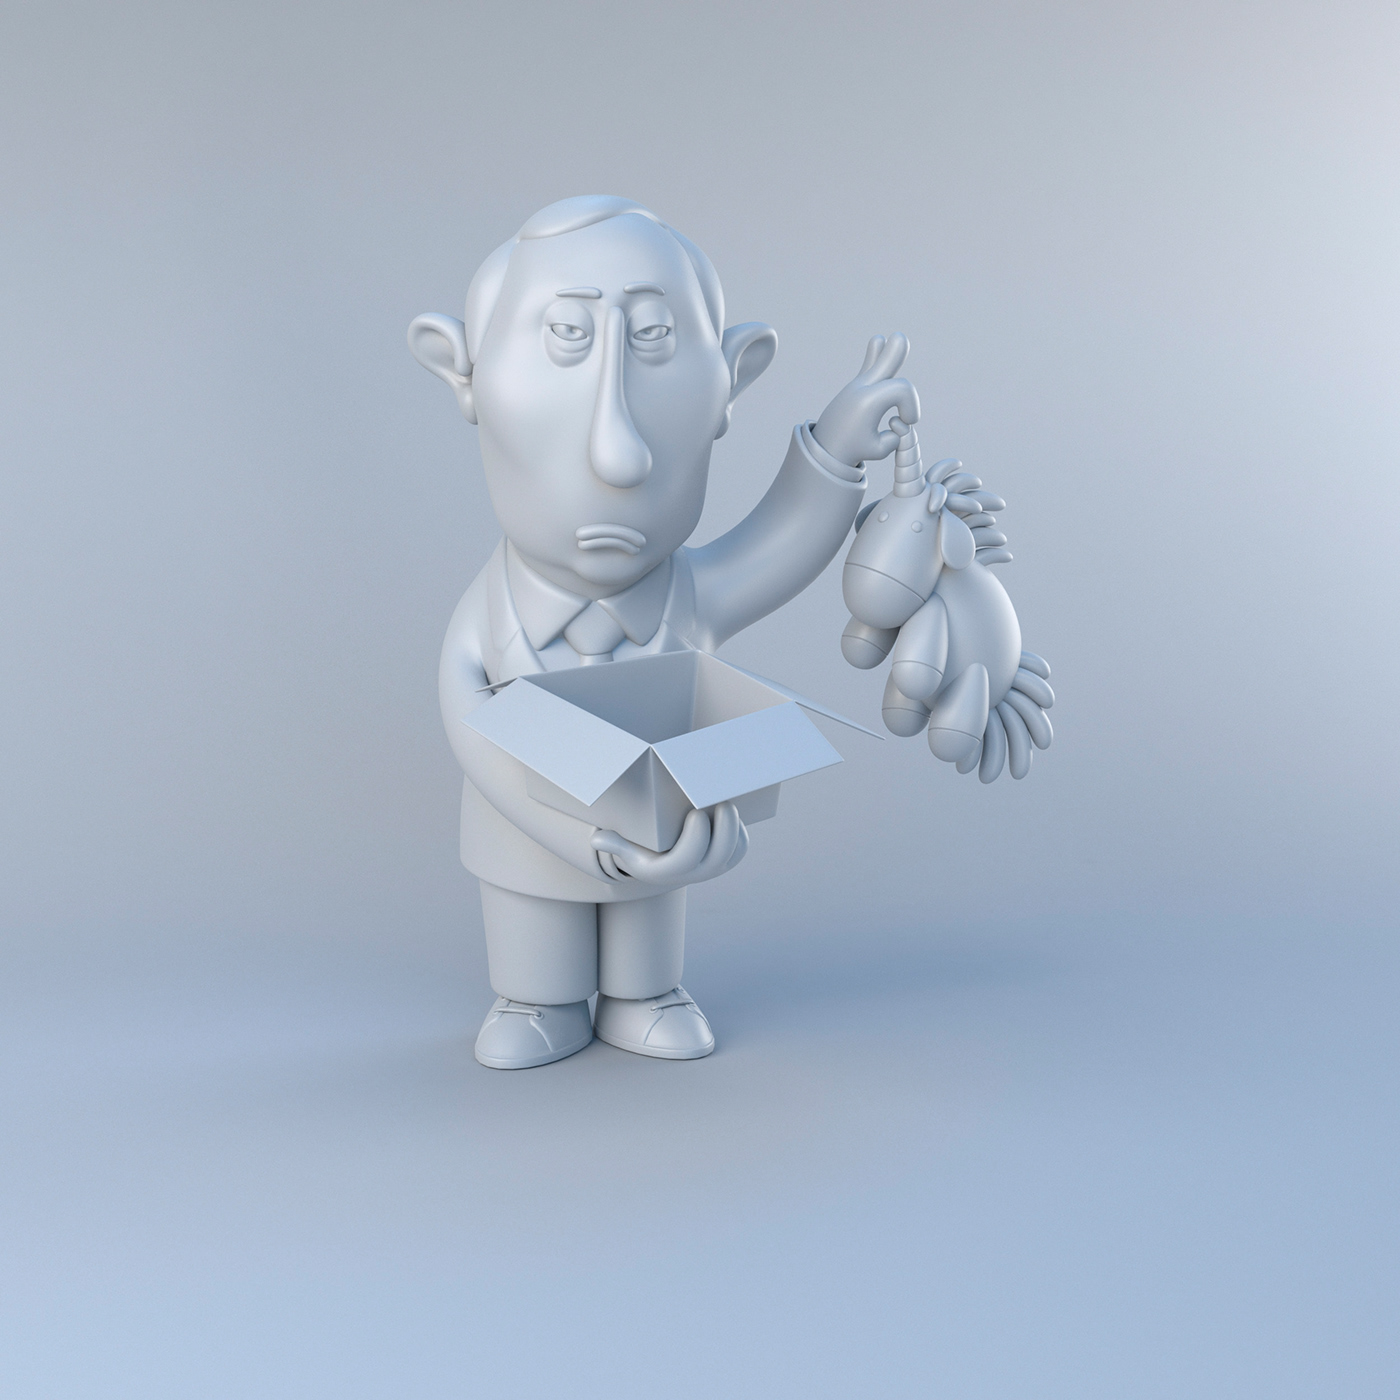 Character design  ILLUSTRATION  3D Trump kim jong-un putin